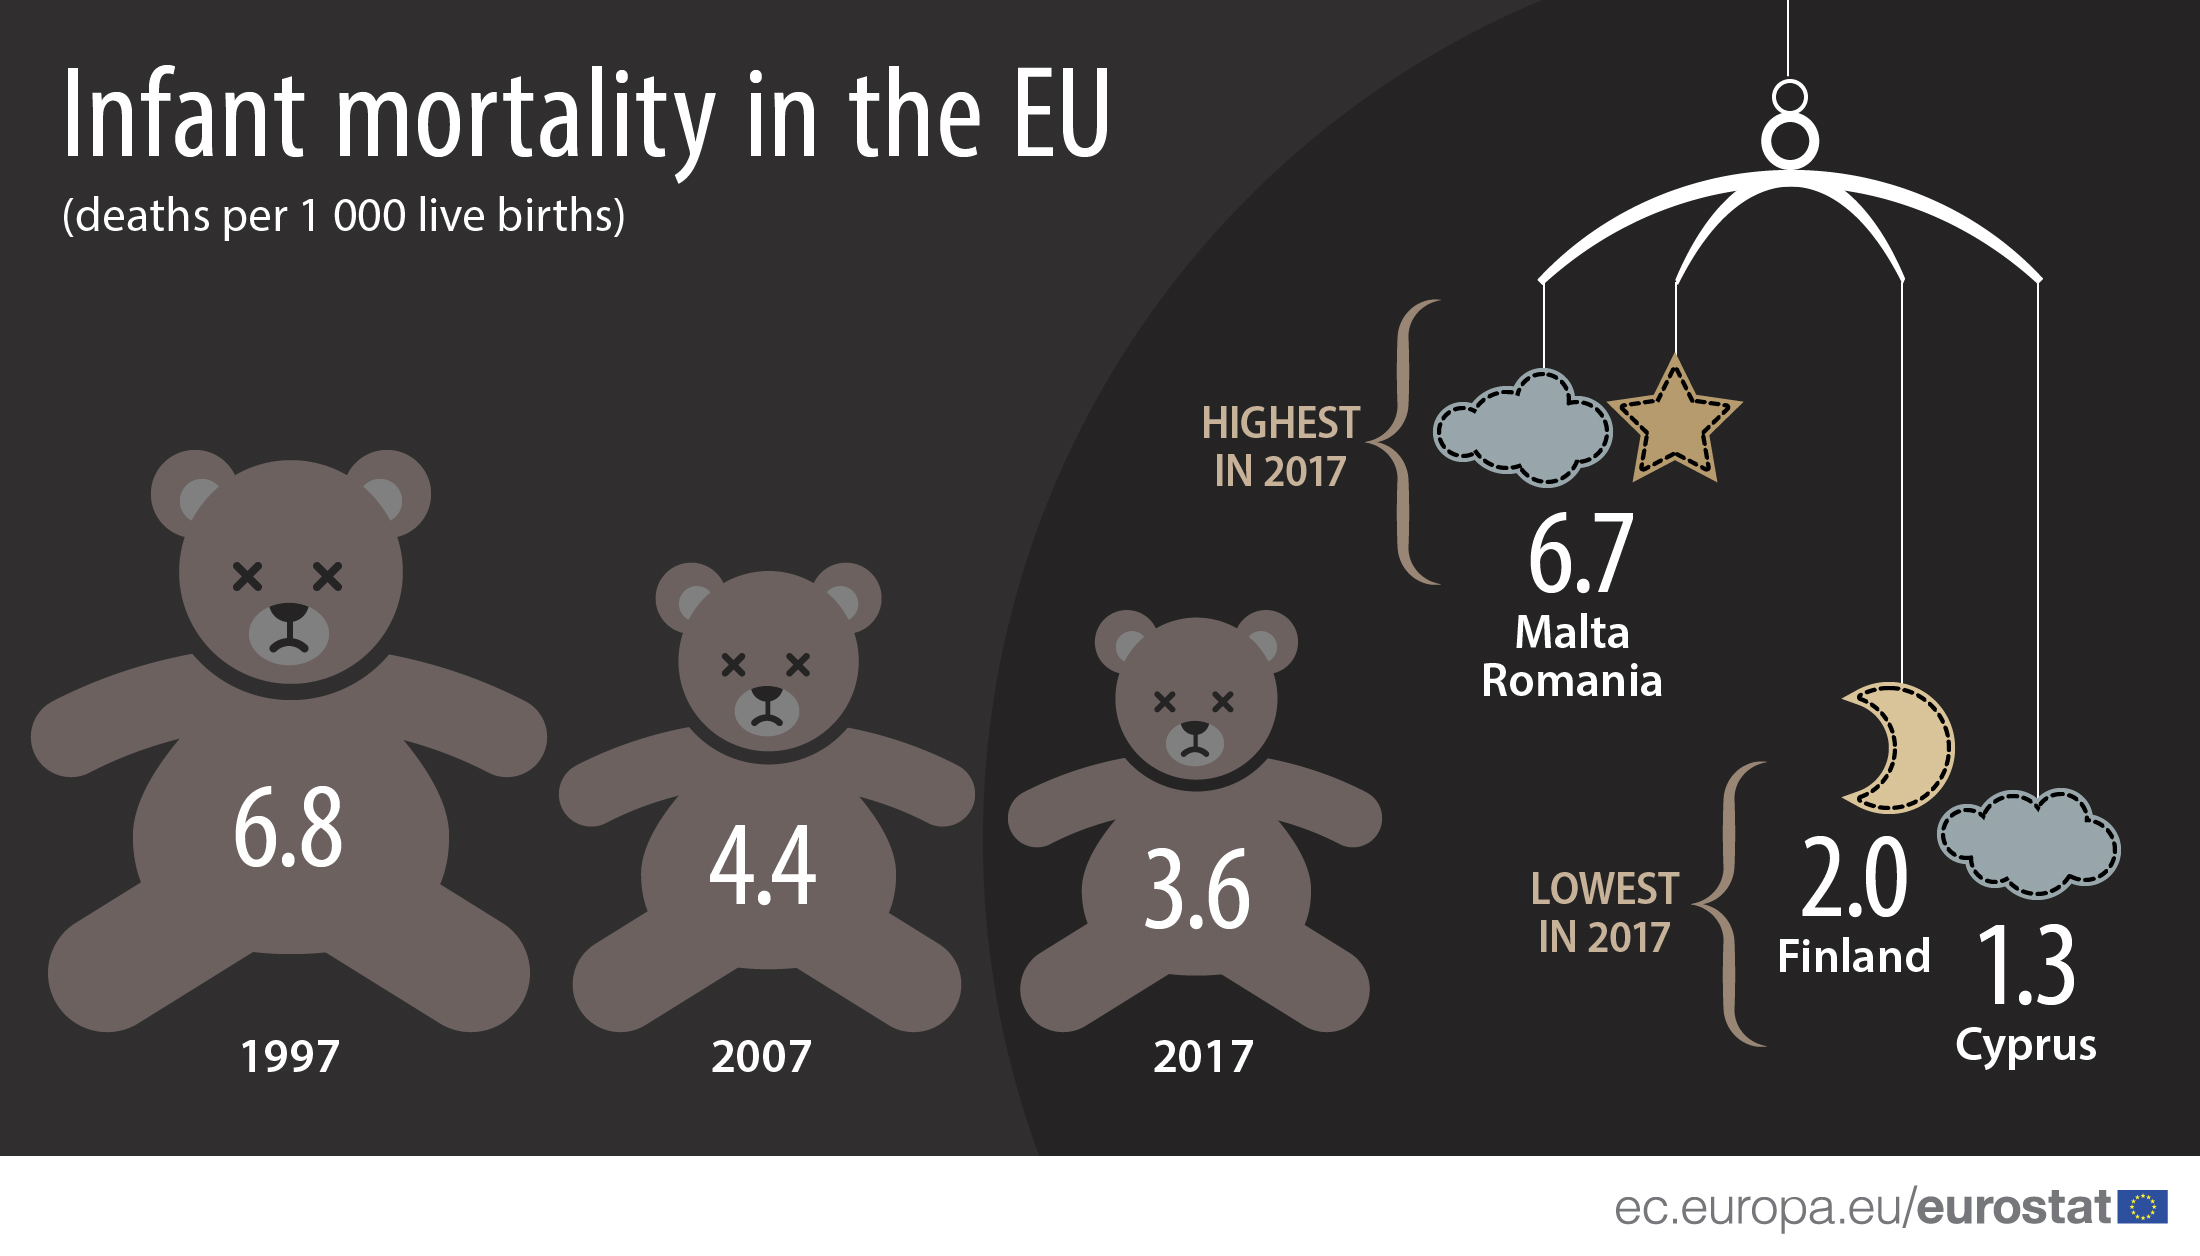 Infant mortality halved between 1997 